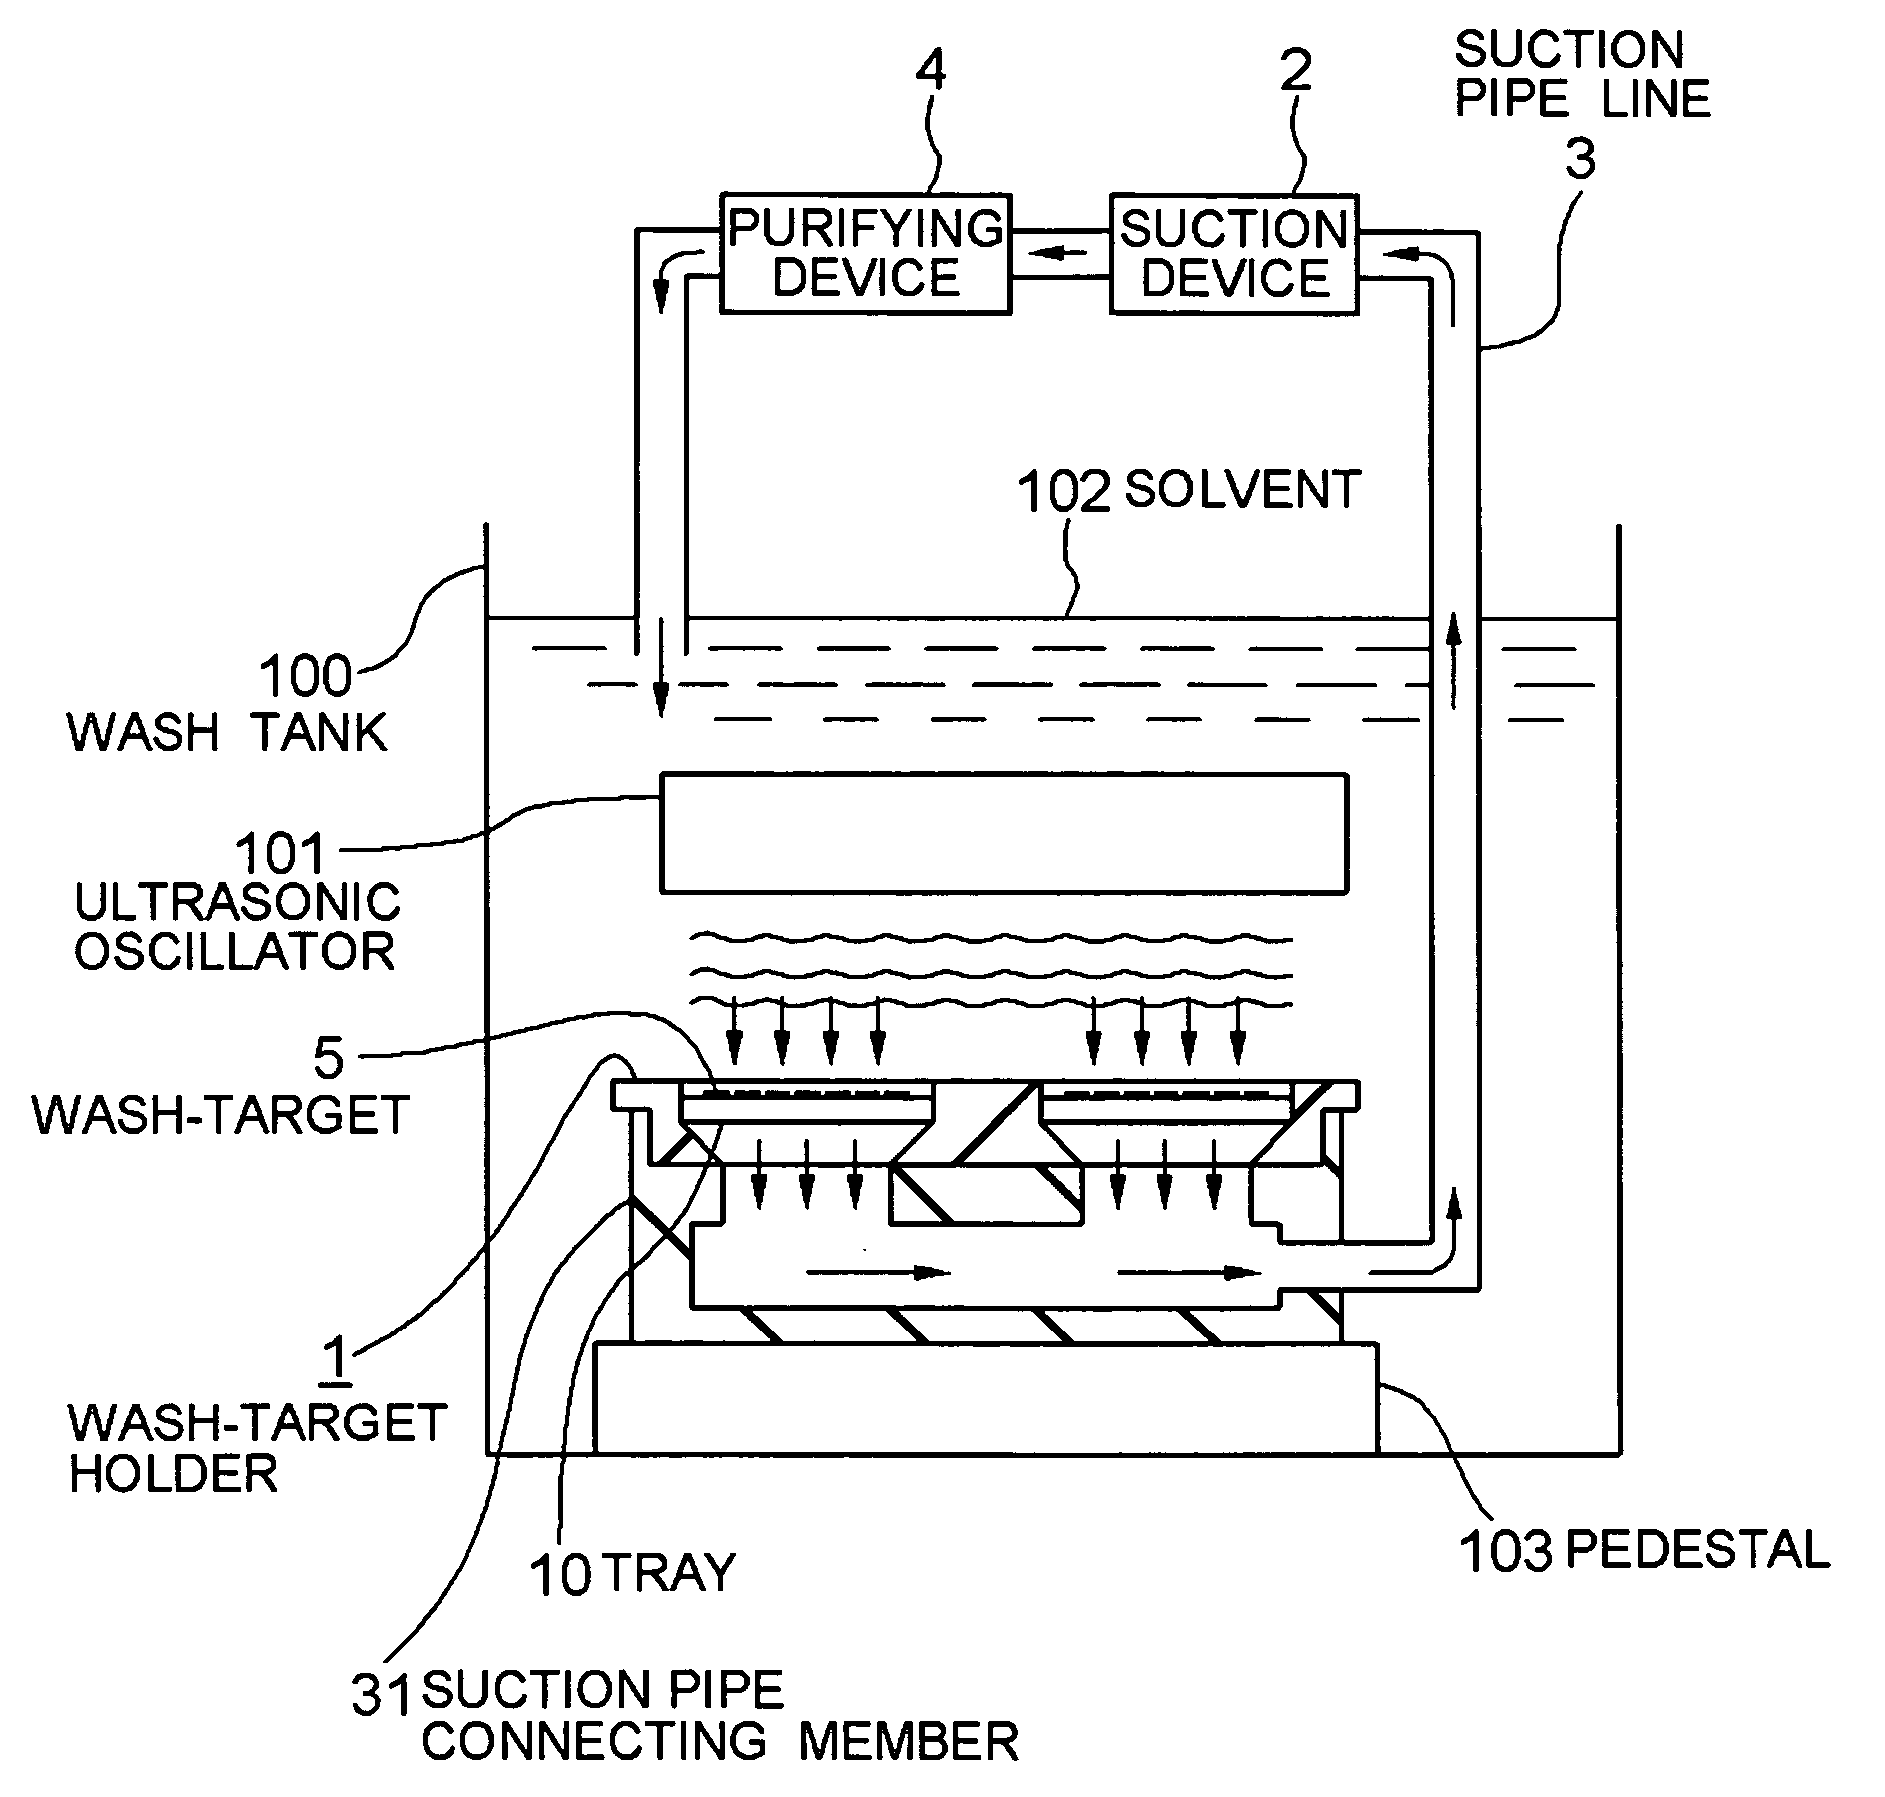 Wash-target holder, and wash-target holding apparatus, washing apparatus and method for washing wash-target using the same